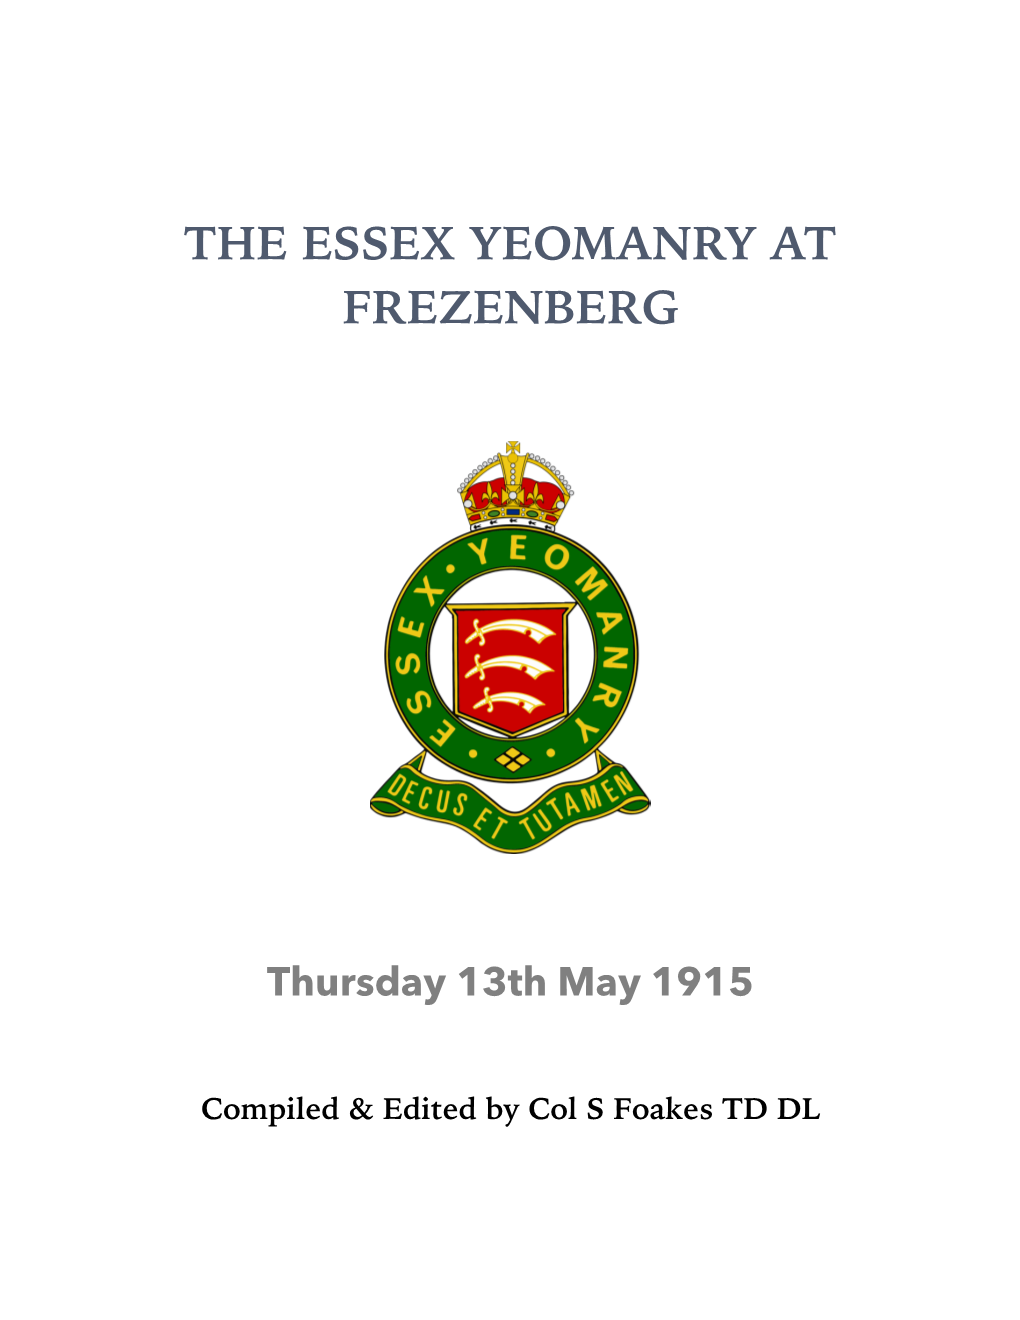 The Essex Yeomanry at Frezenberg